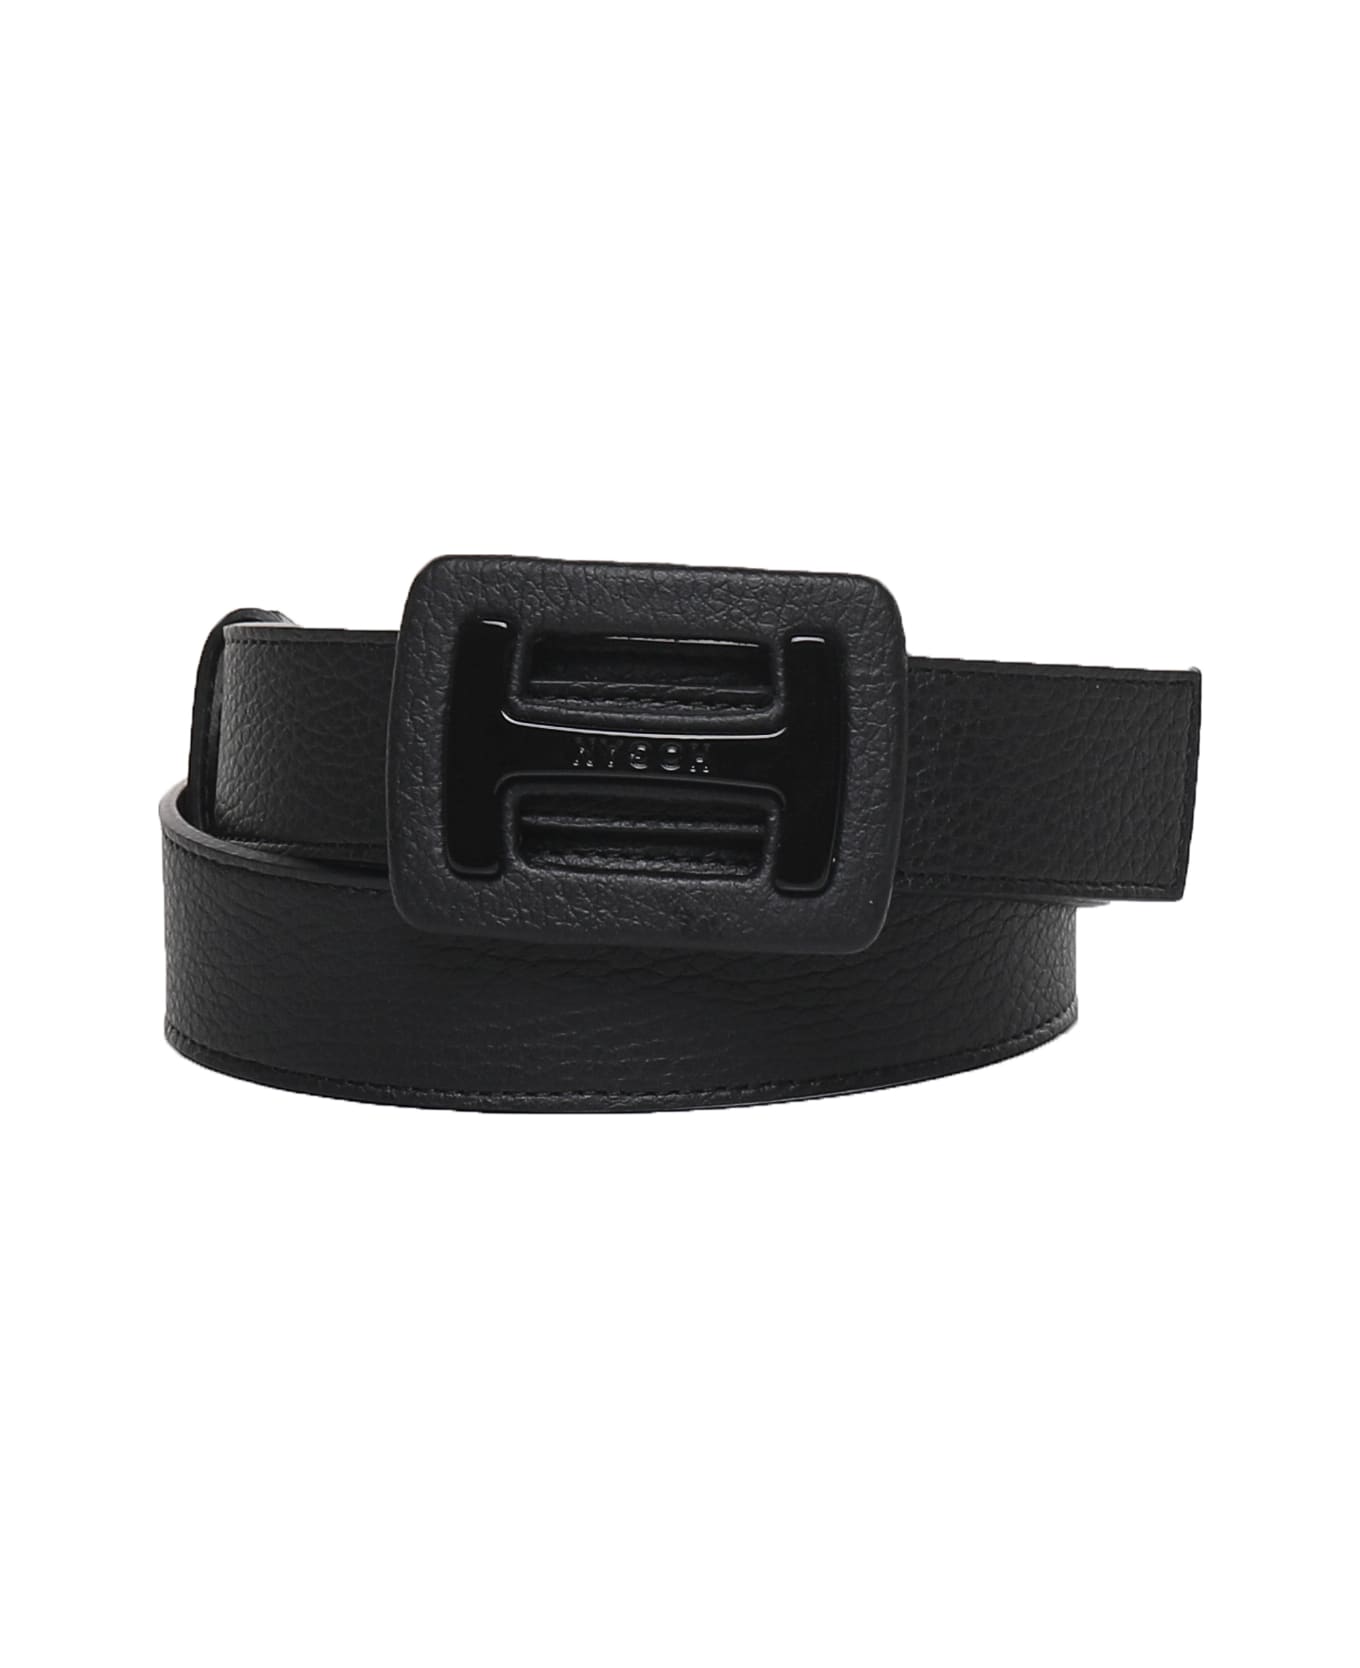 Hogan Leather Belt With Rectangular Buckle - Black